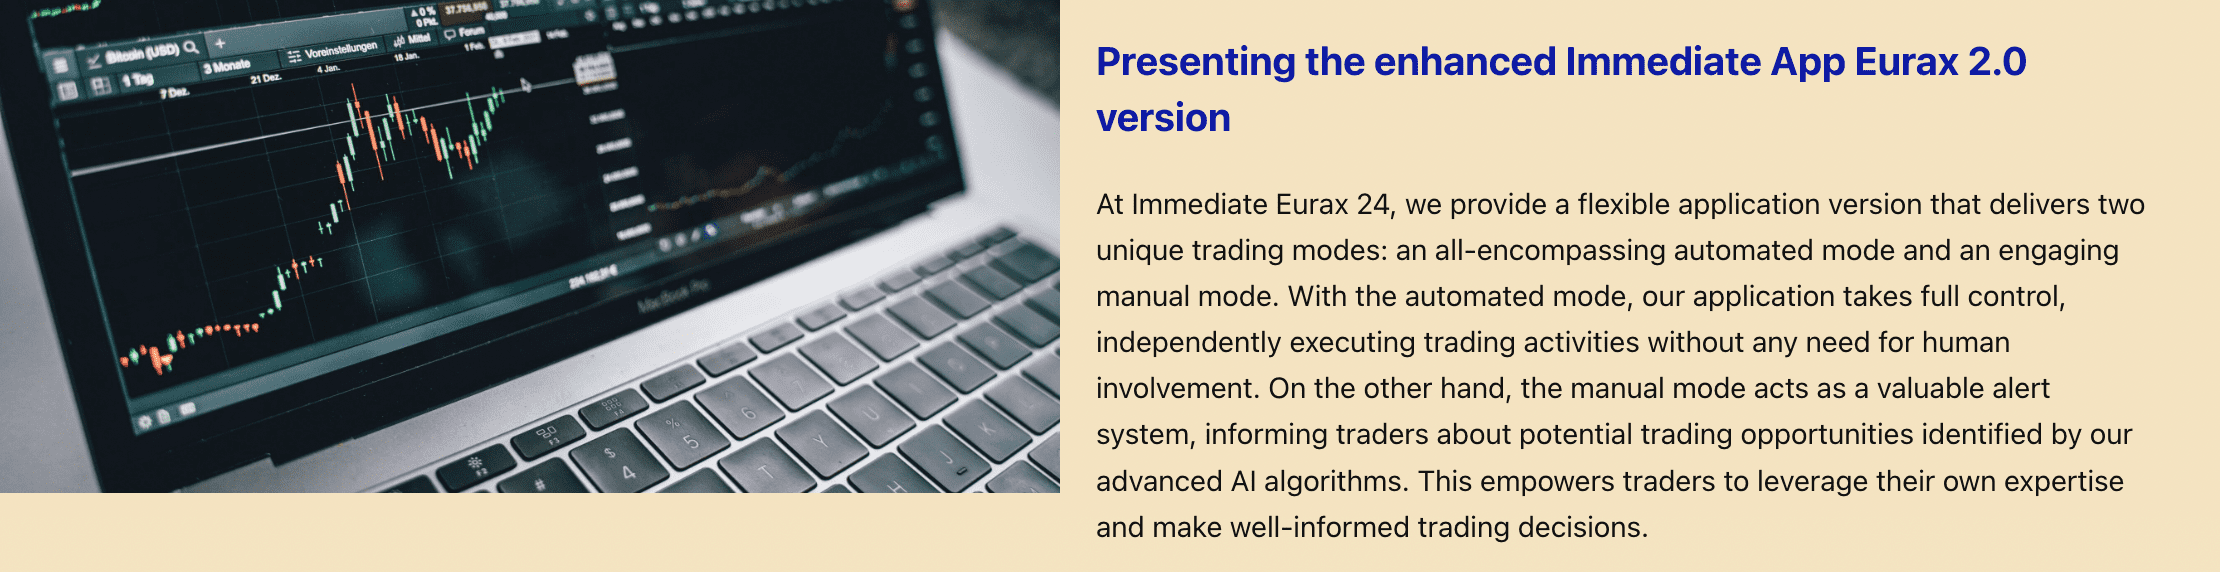 Immediate Eurax 1.0 nieuwe versie